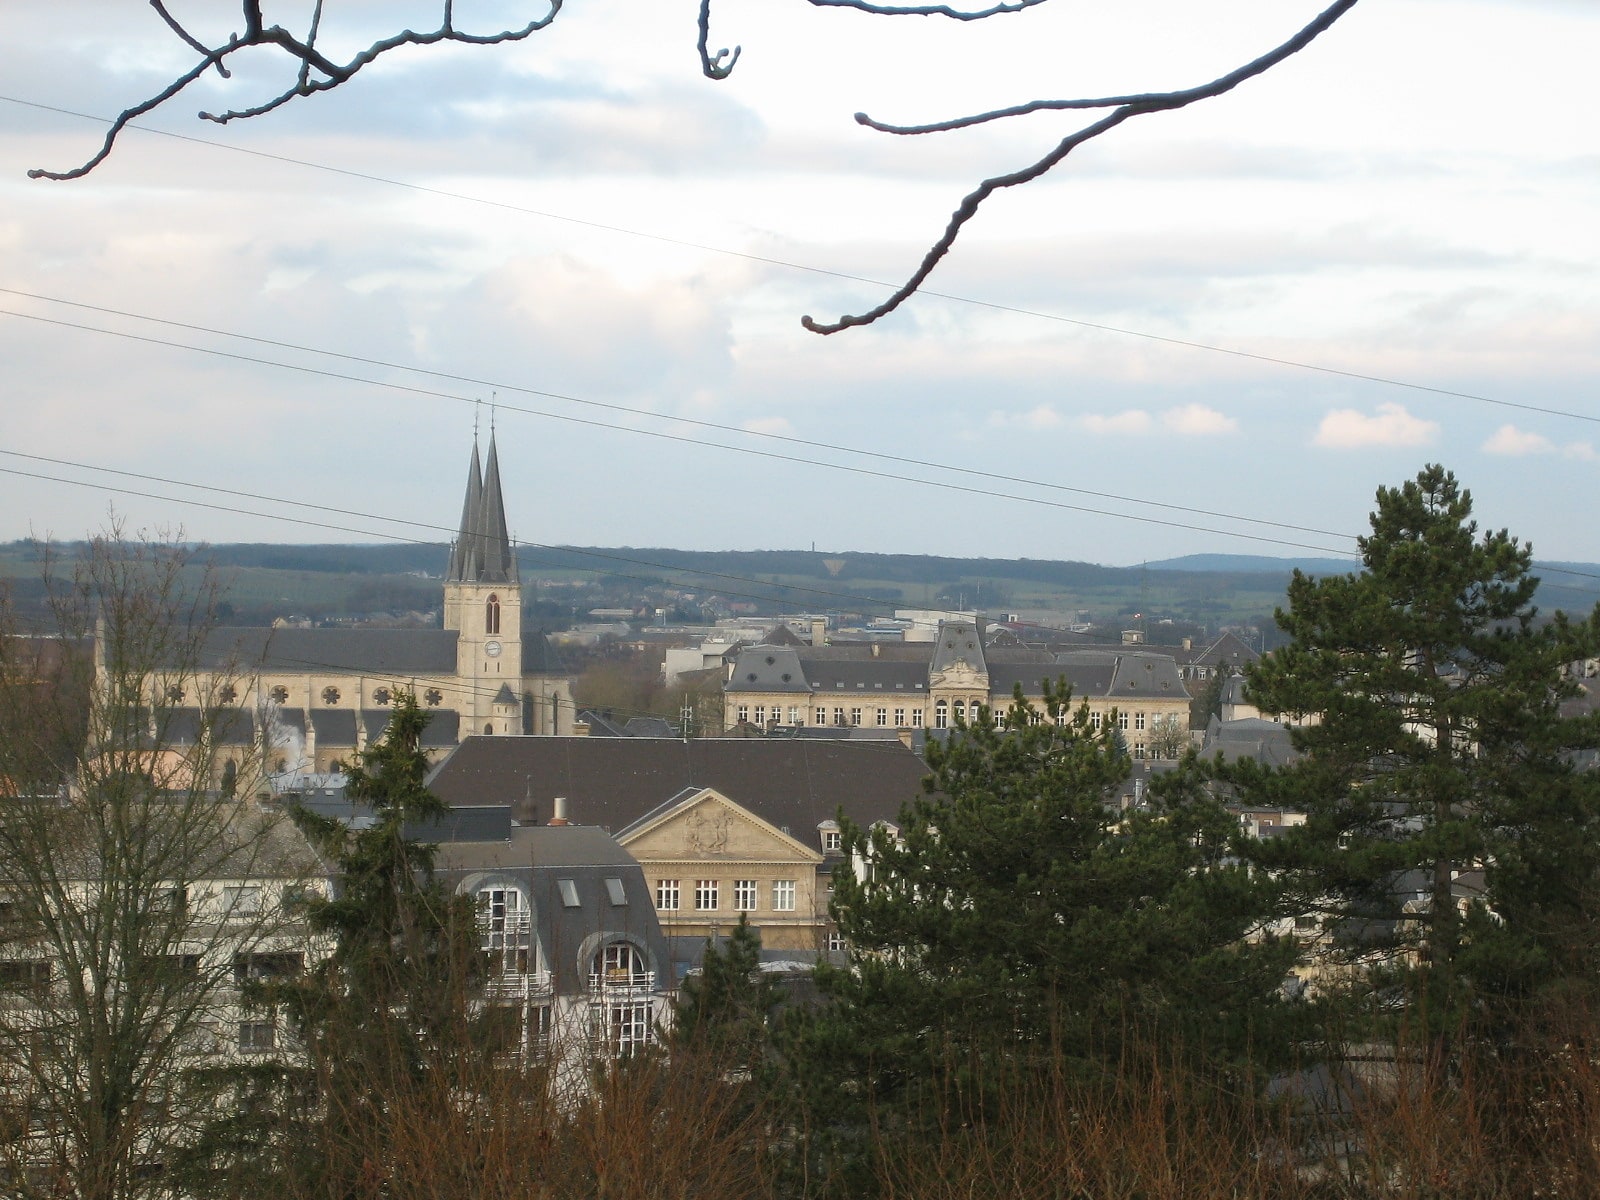 Esch-sur-Alzette, Luxembourg